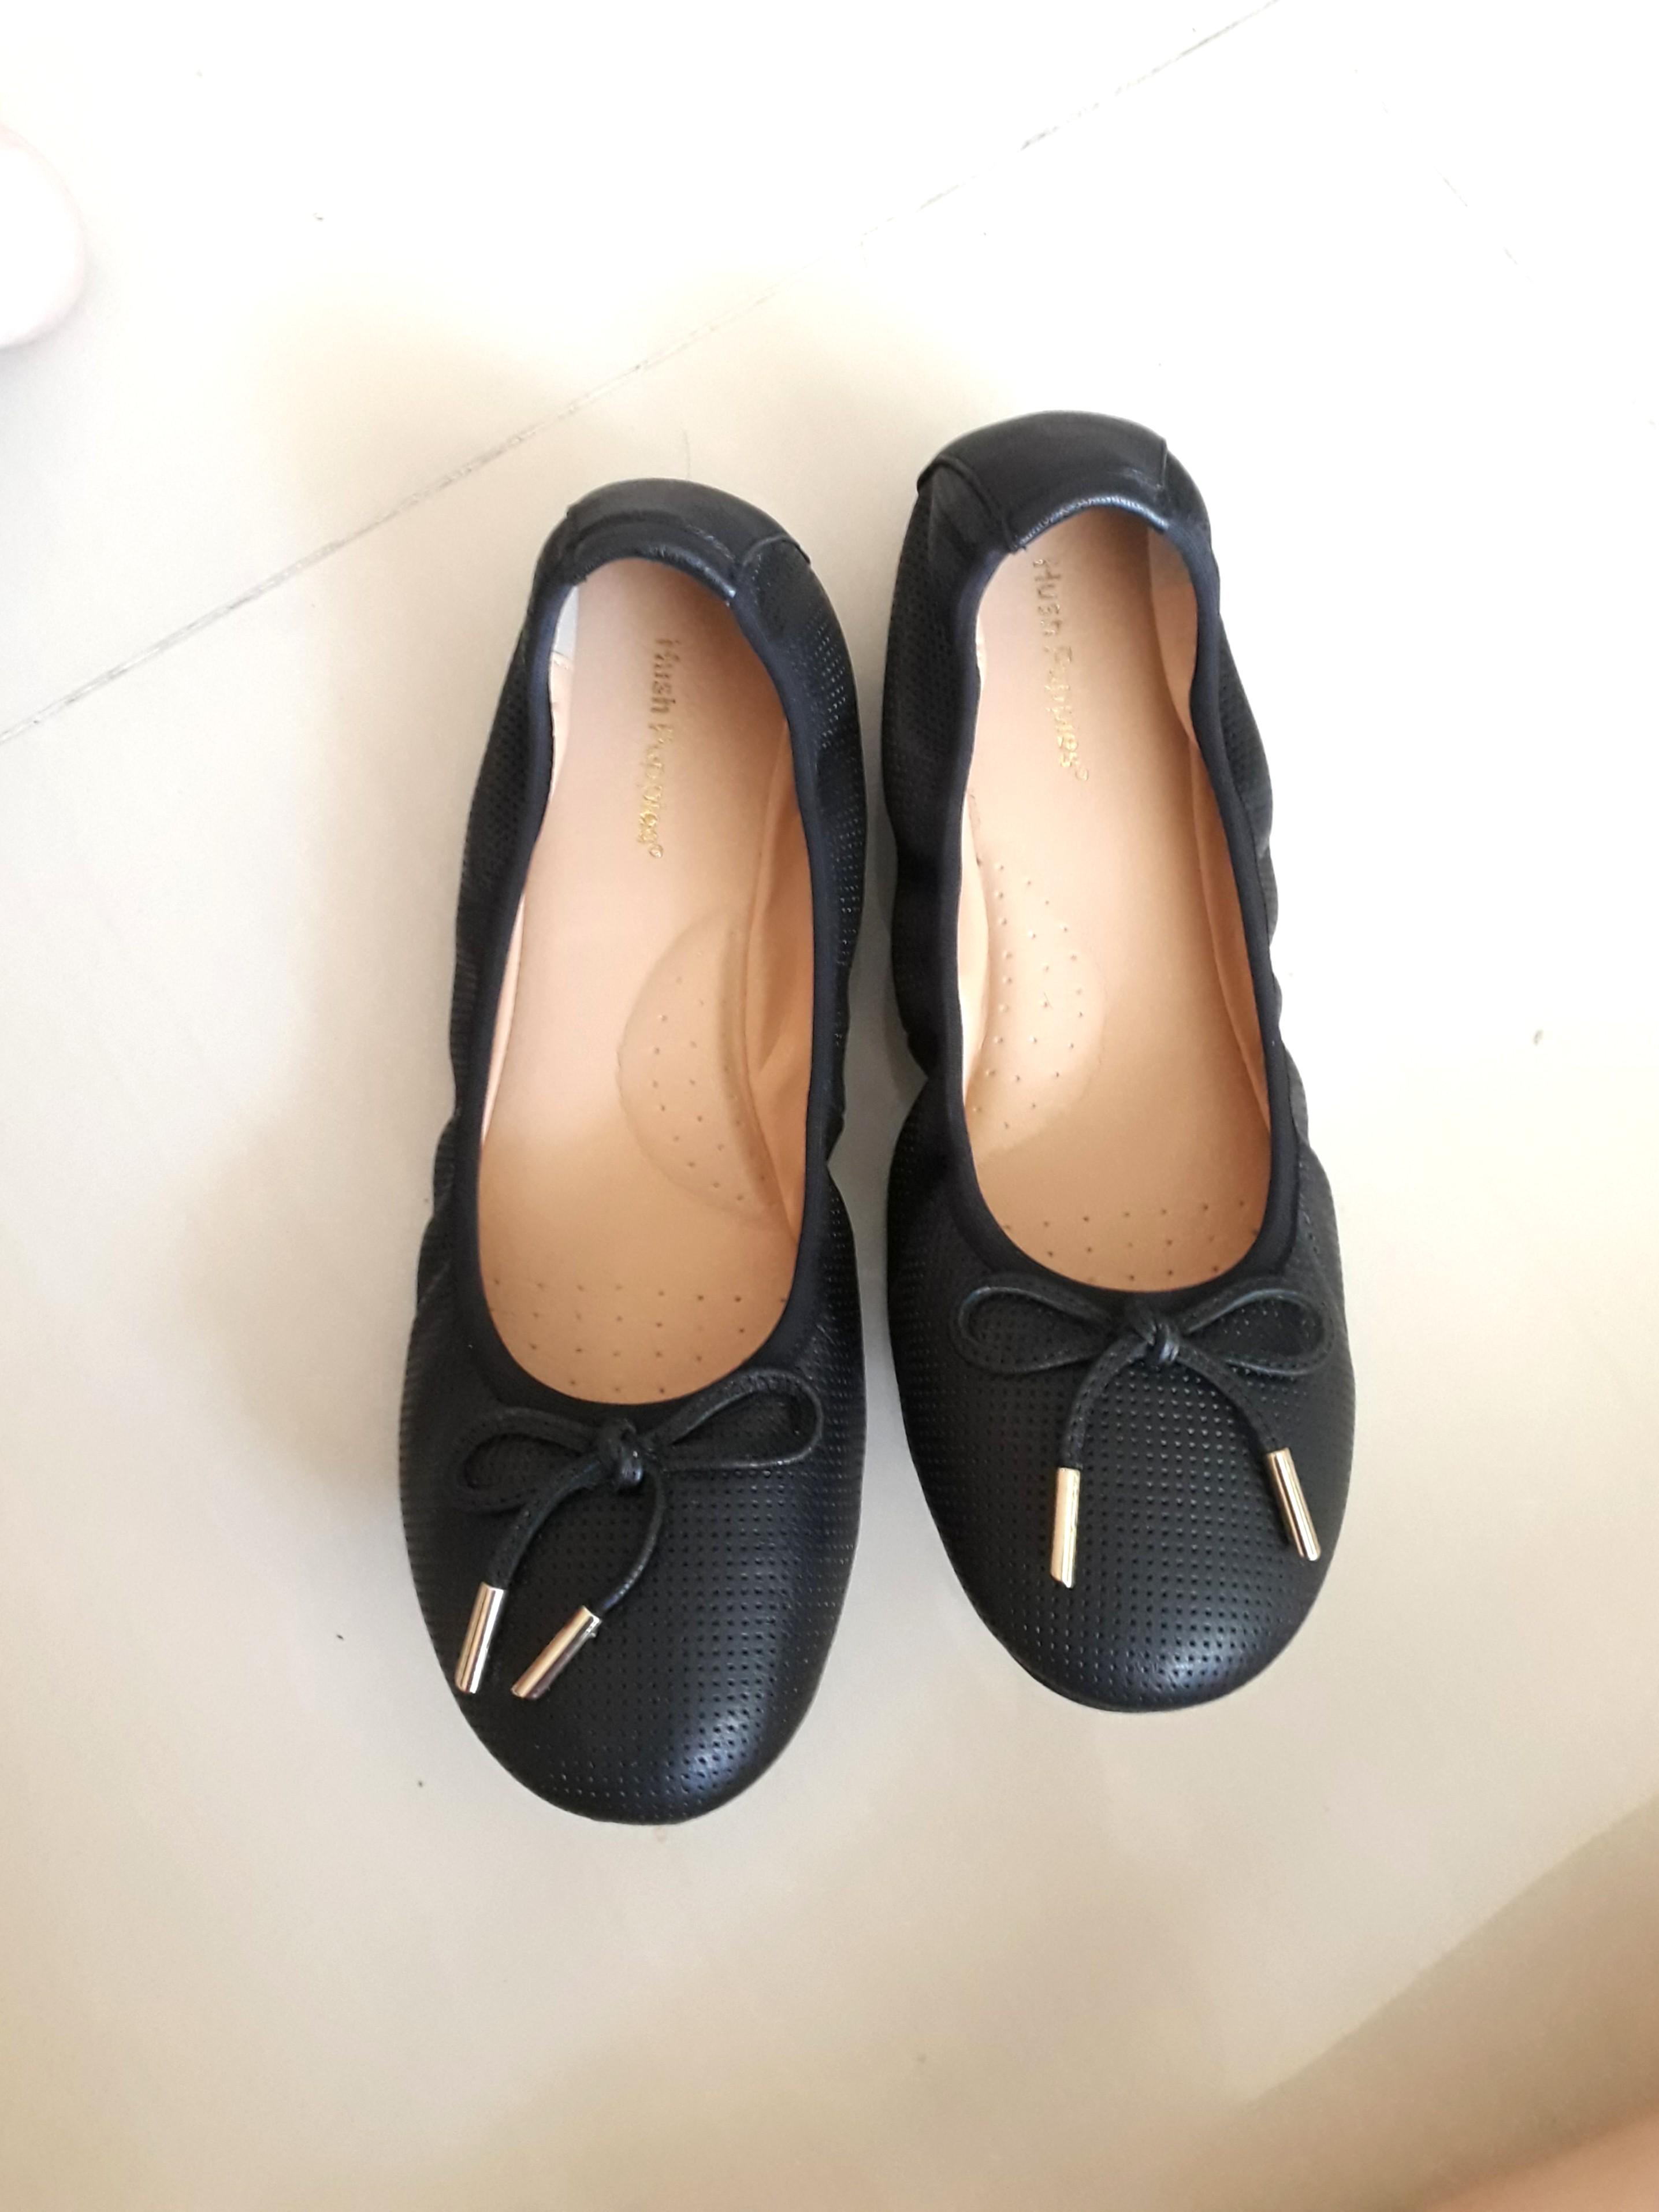 Hush Puppies Black Ballet Flats shoes 